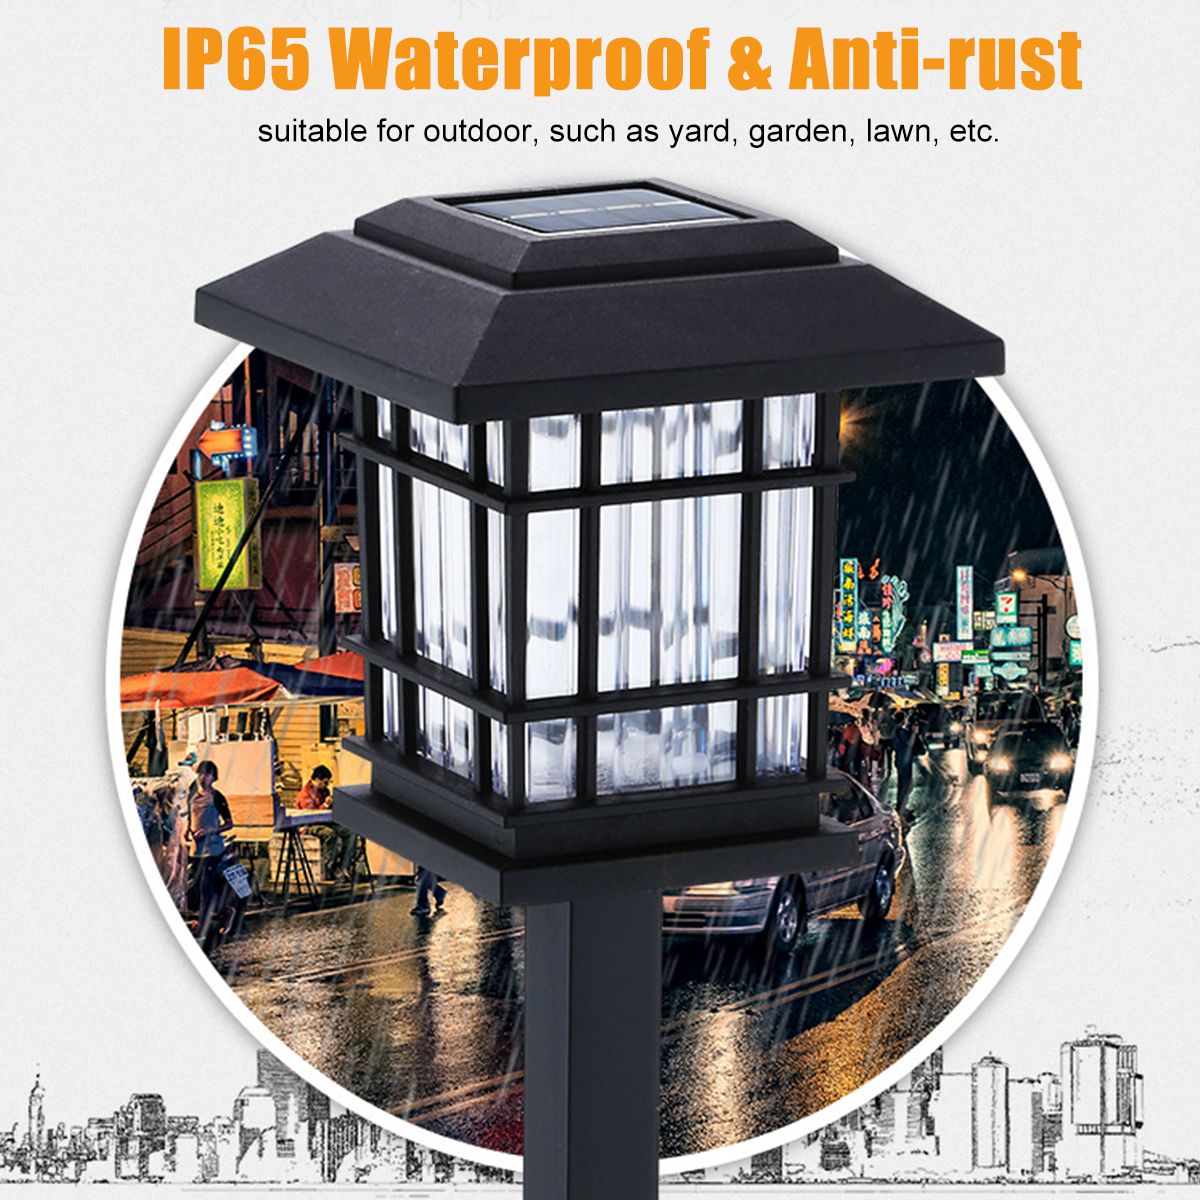 2PCS-Auto-Sensing-LED-Solar-Lamp-Garden-Lamps-For-Outdoor-Patio-Lawn-1755204